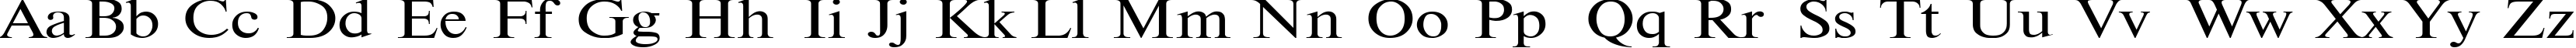 Пример написания английского алфавита шрифтом TimesET120n